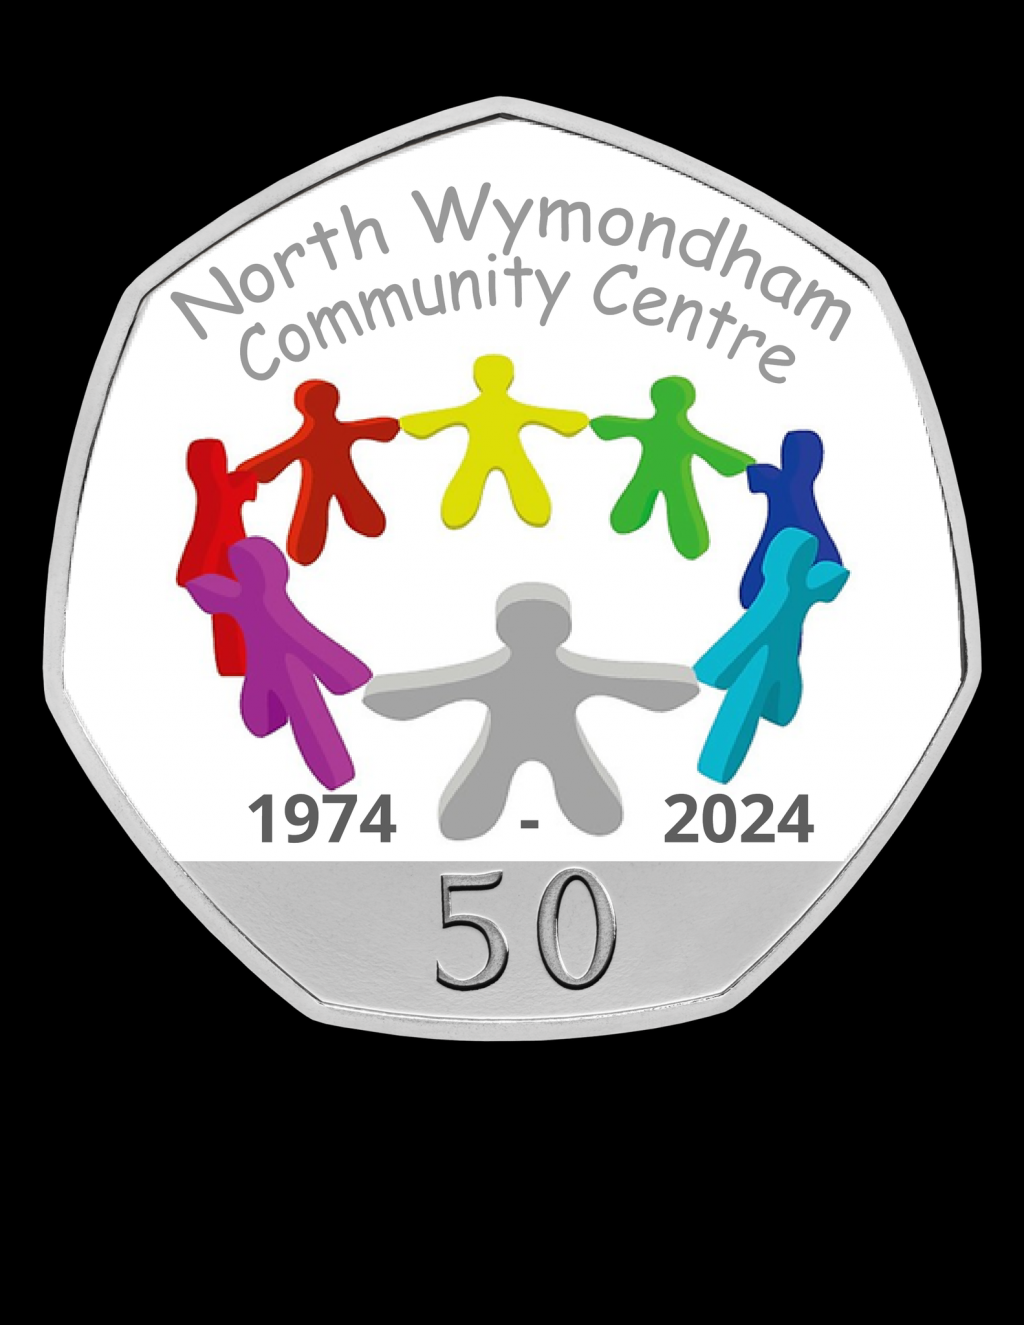 North Wymondham Community Centre 50 years logo